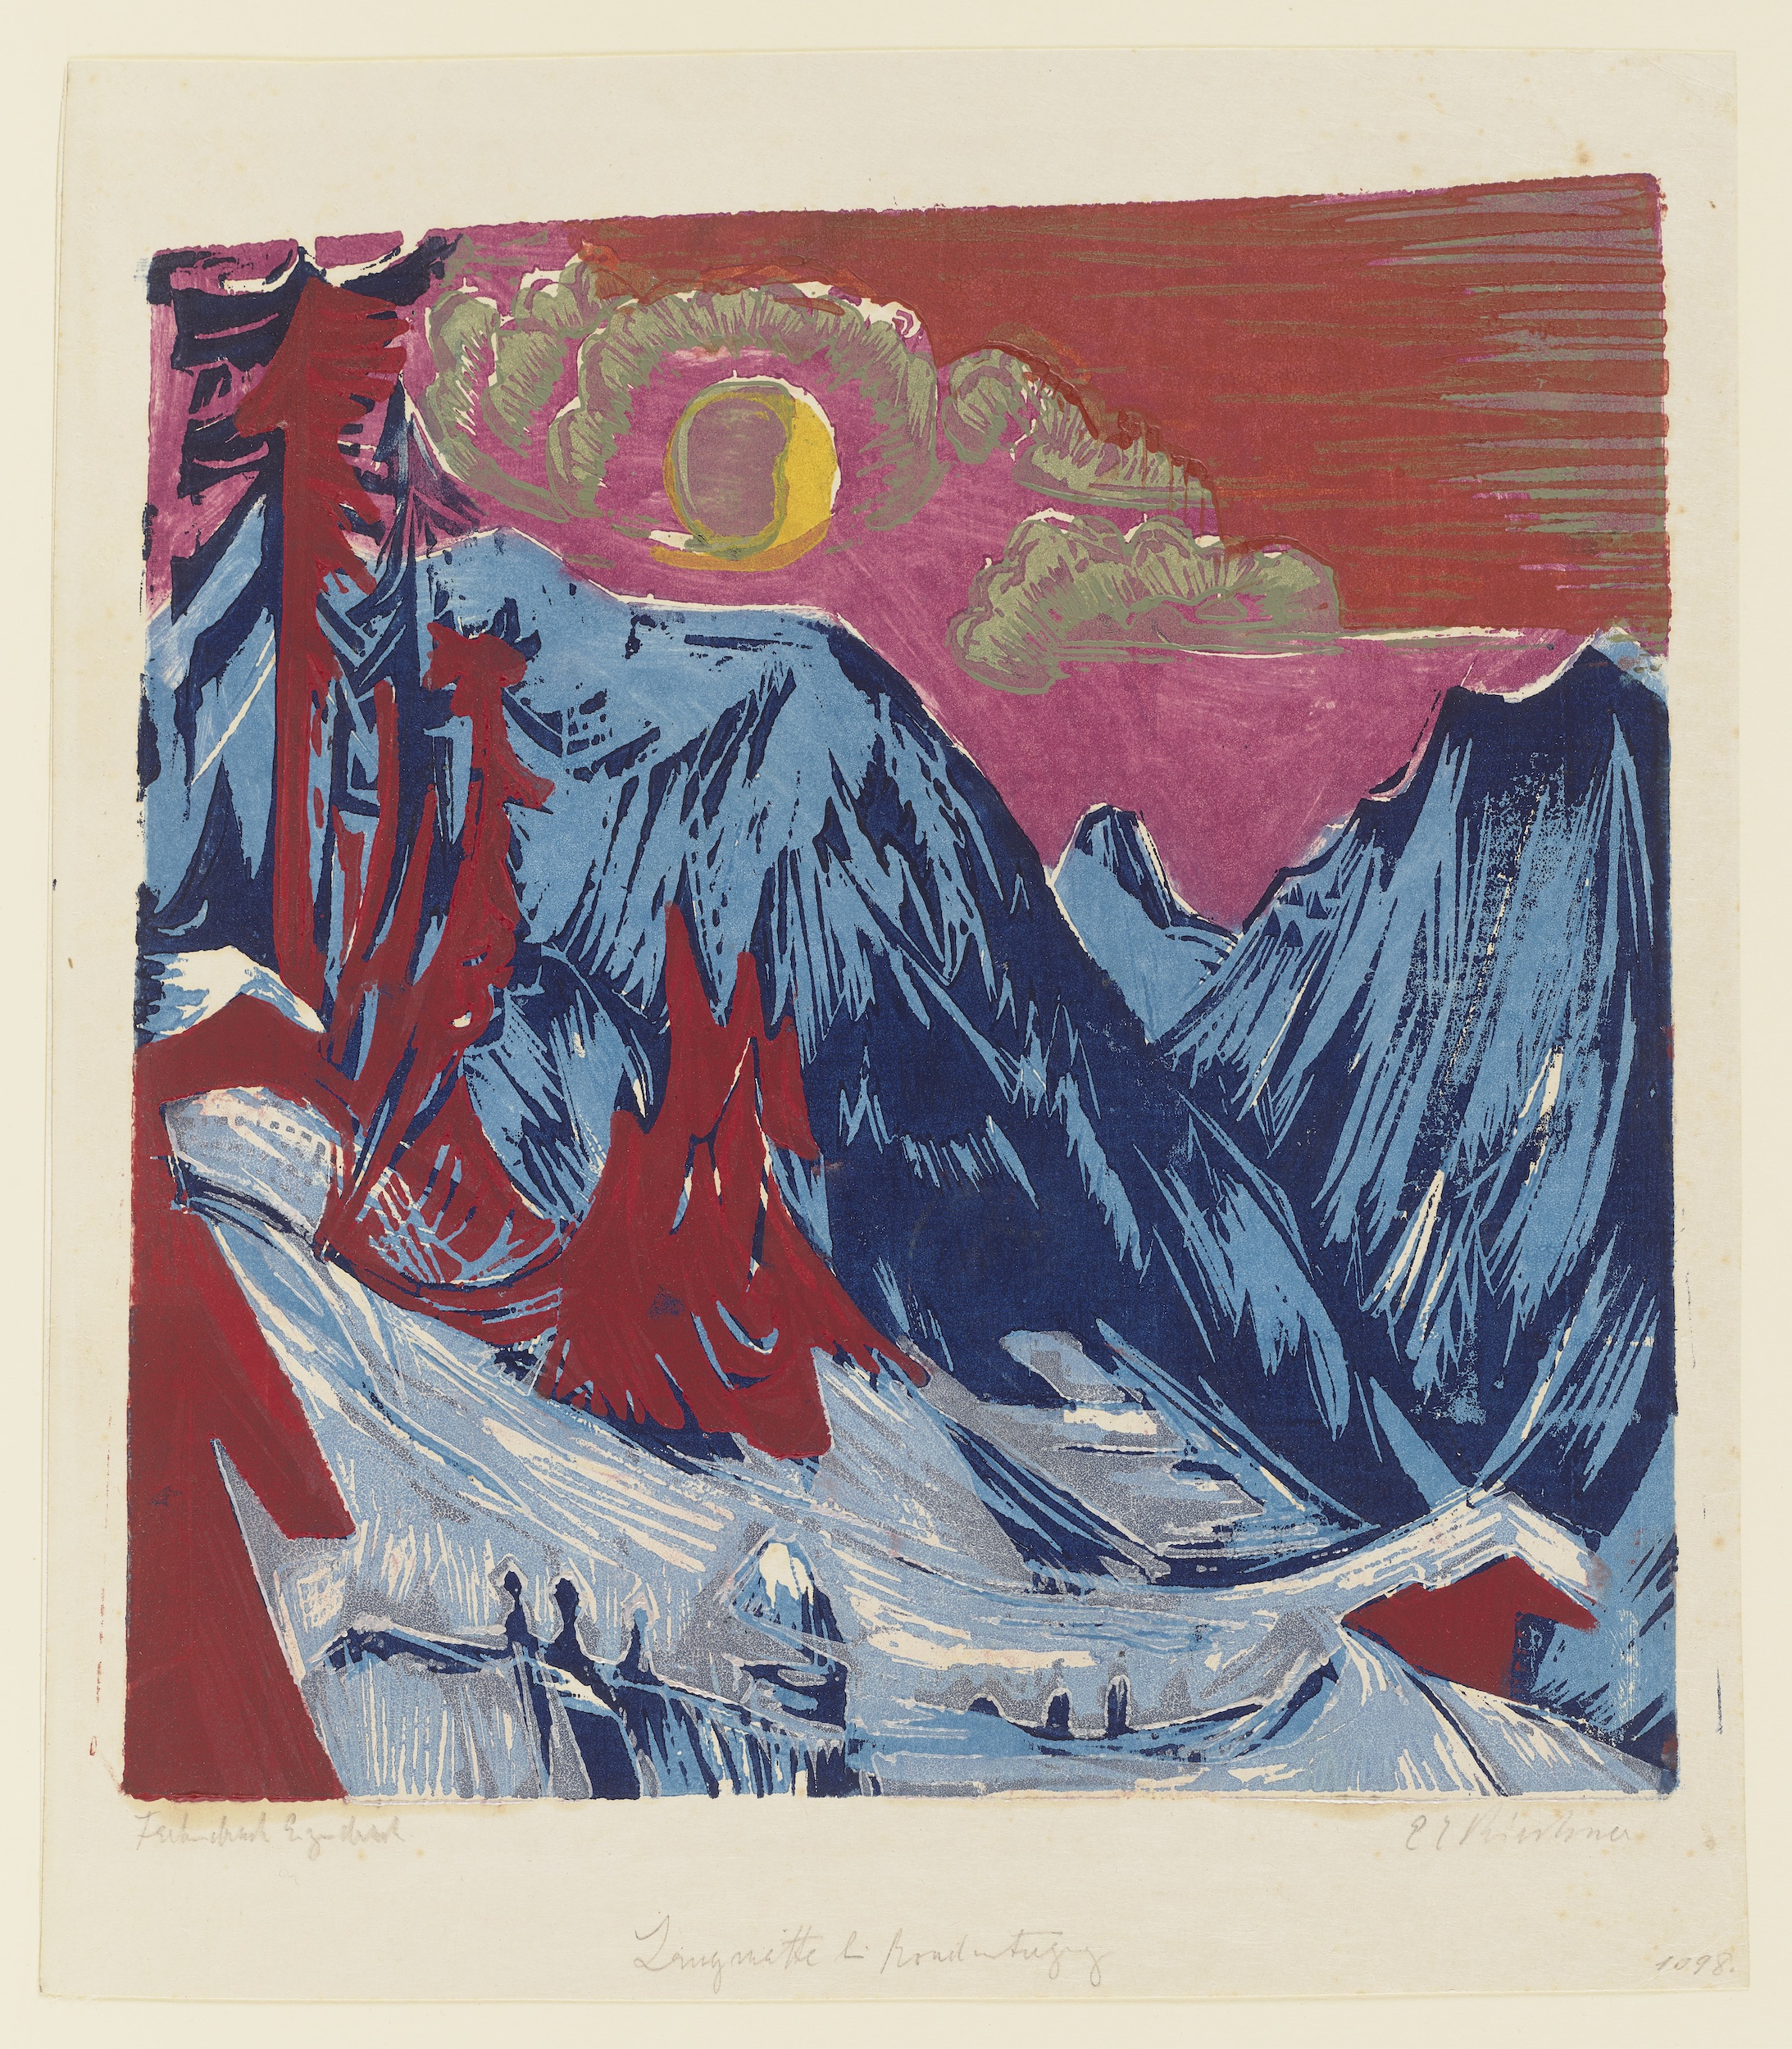 冬月夜 by Ernst Ludwig Kirchner - 1919 - 36.7 x 32.3 cm 